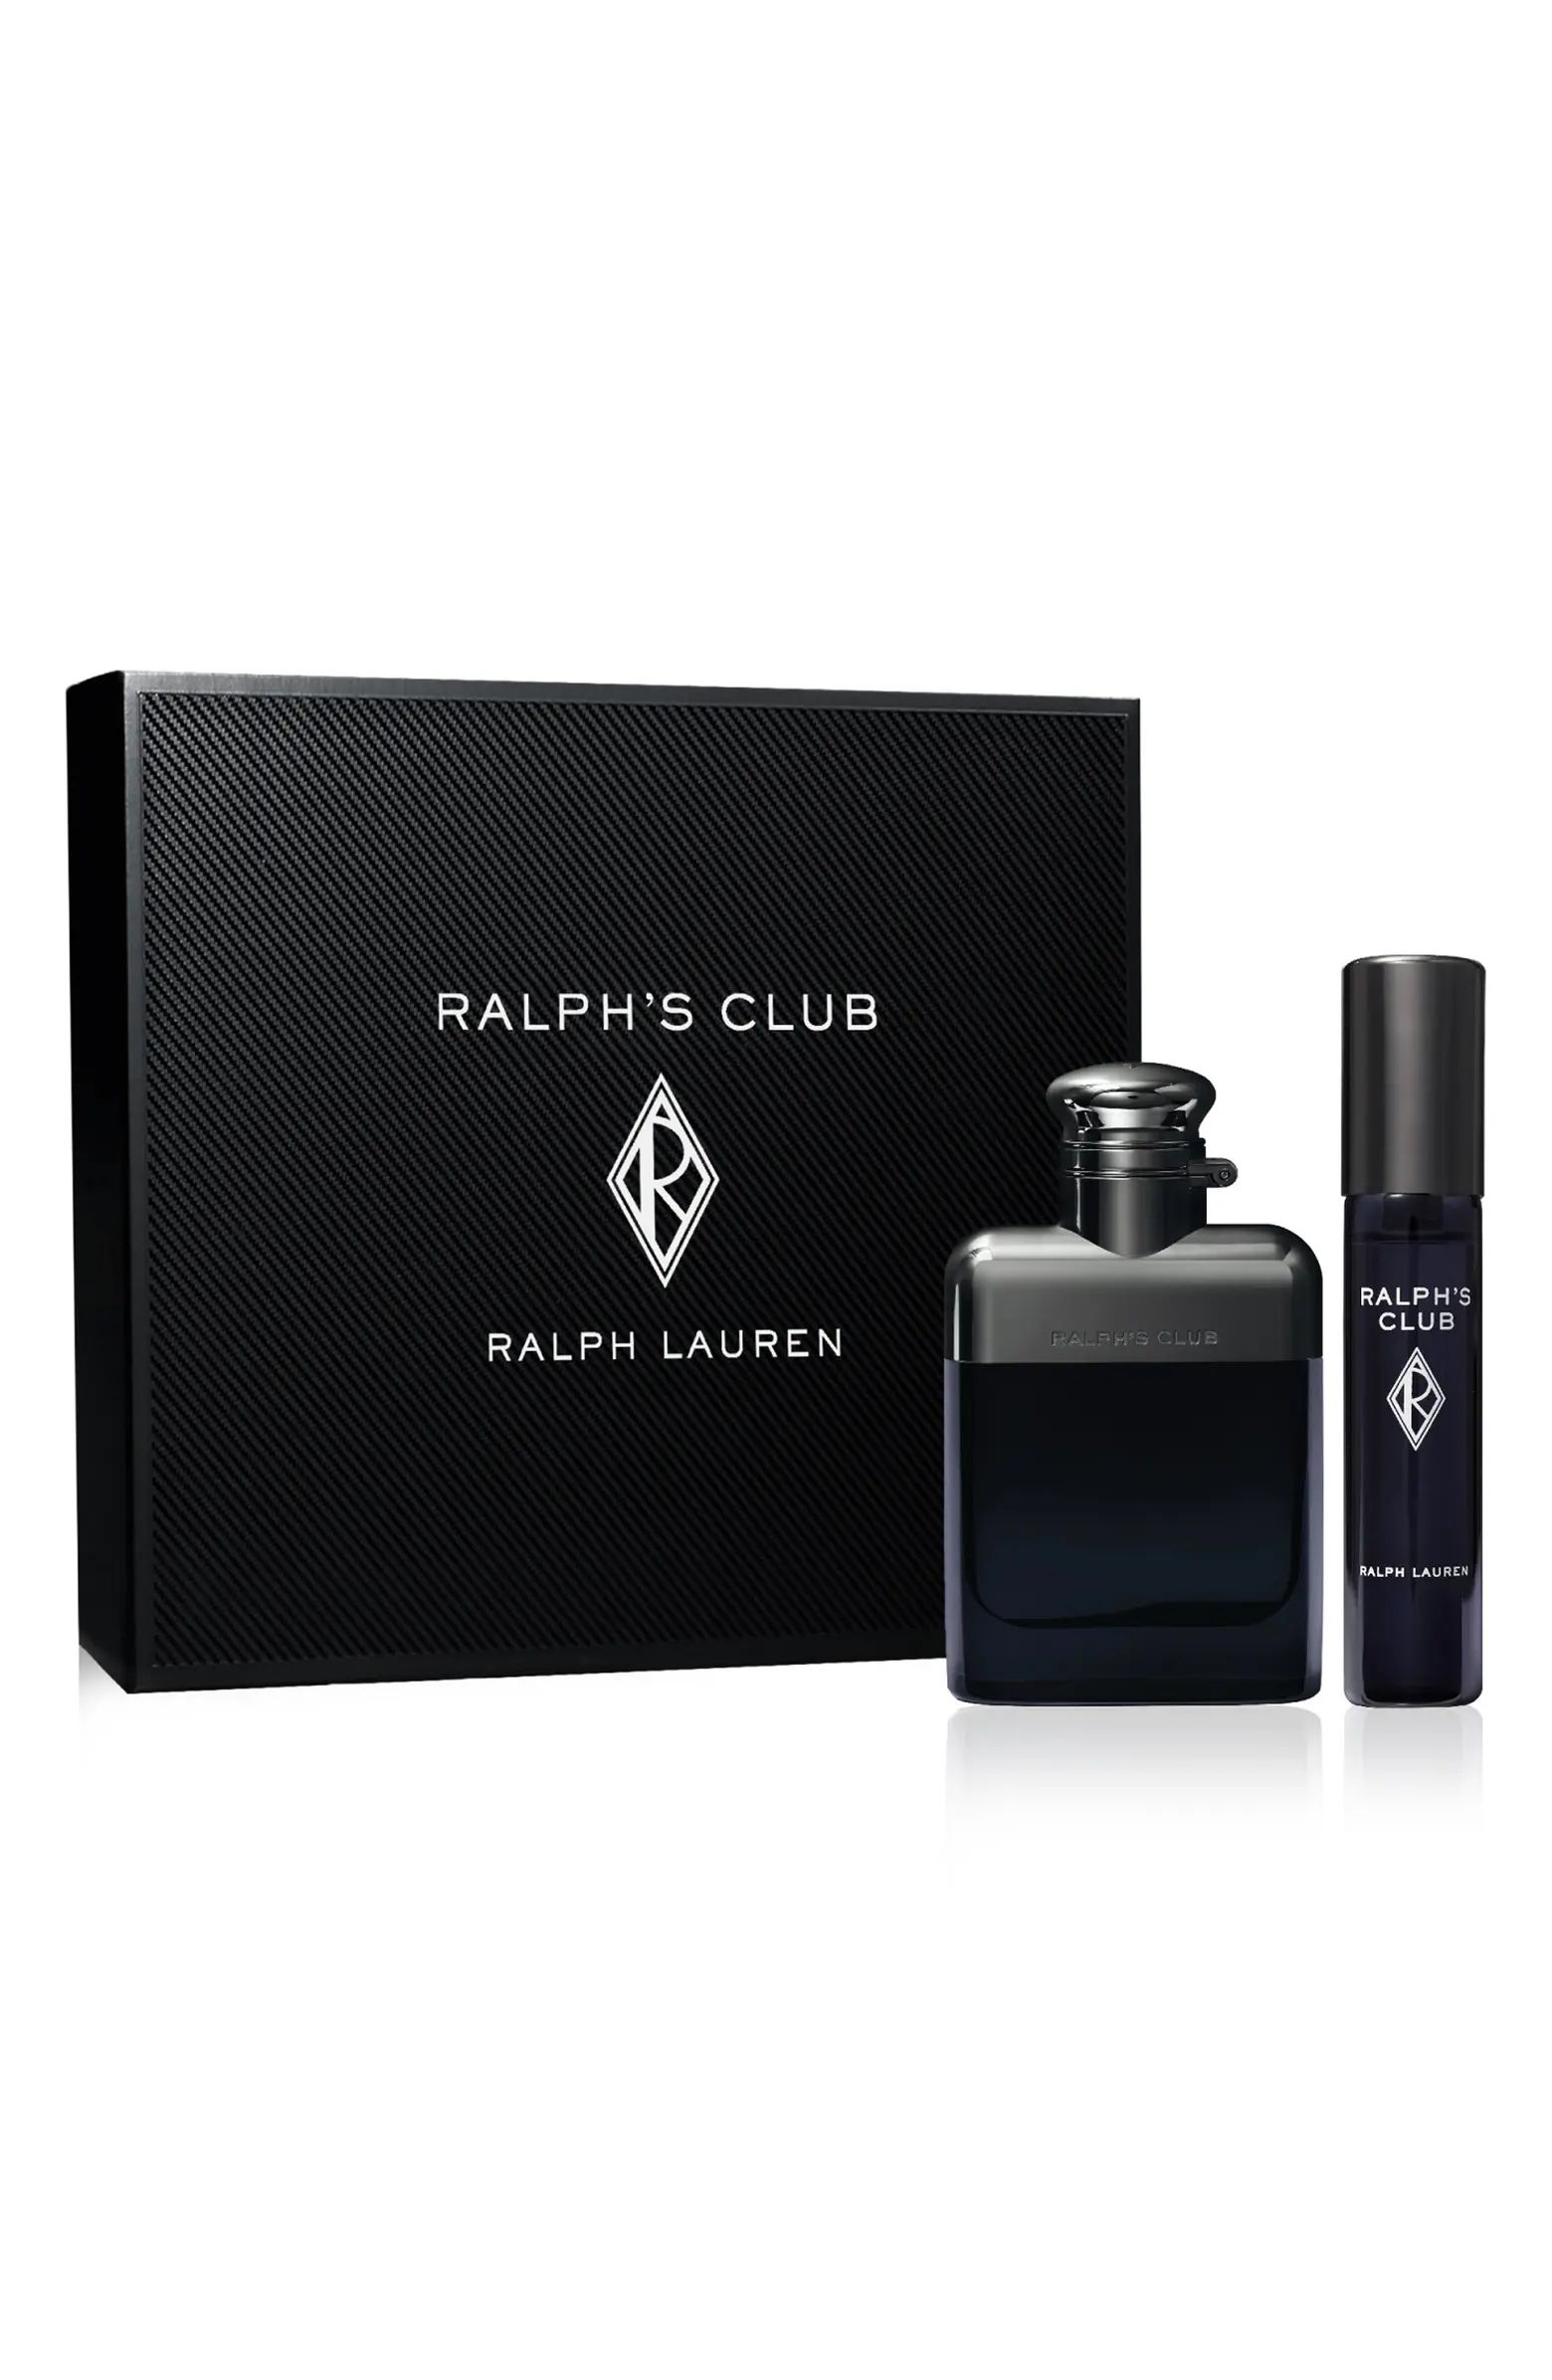 Ralph Lauren Ralph's Club Eau de Parfum Set USD $112 Value | Nordstrom | Nordstrom